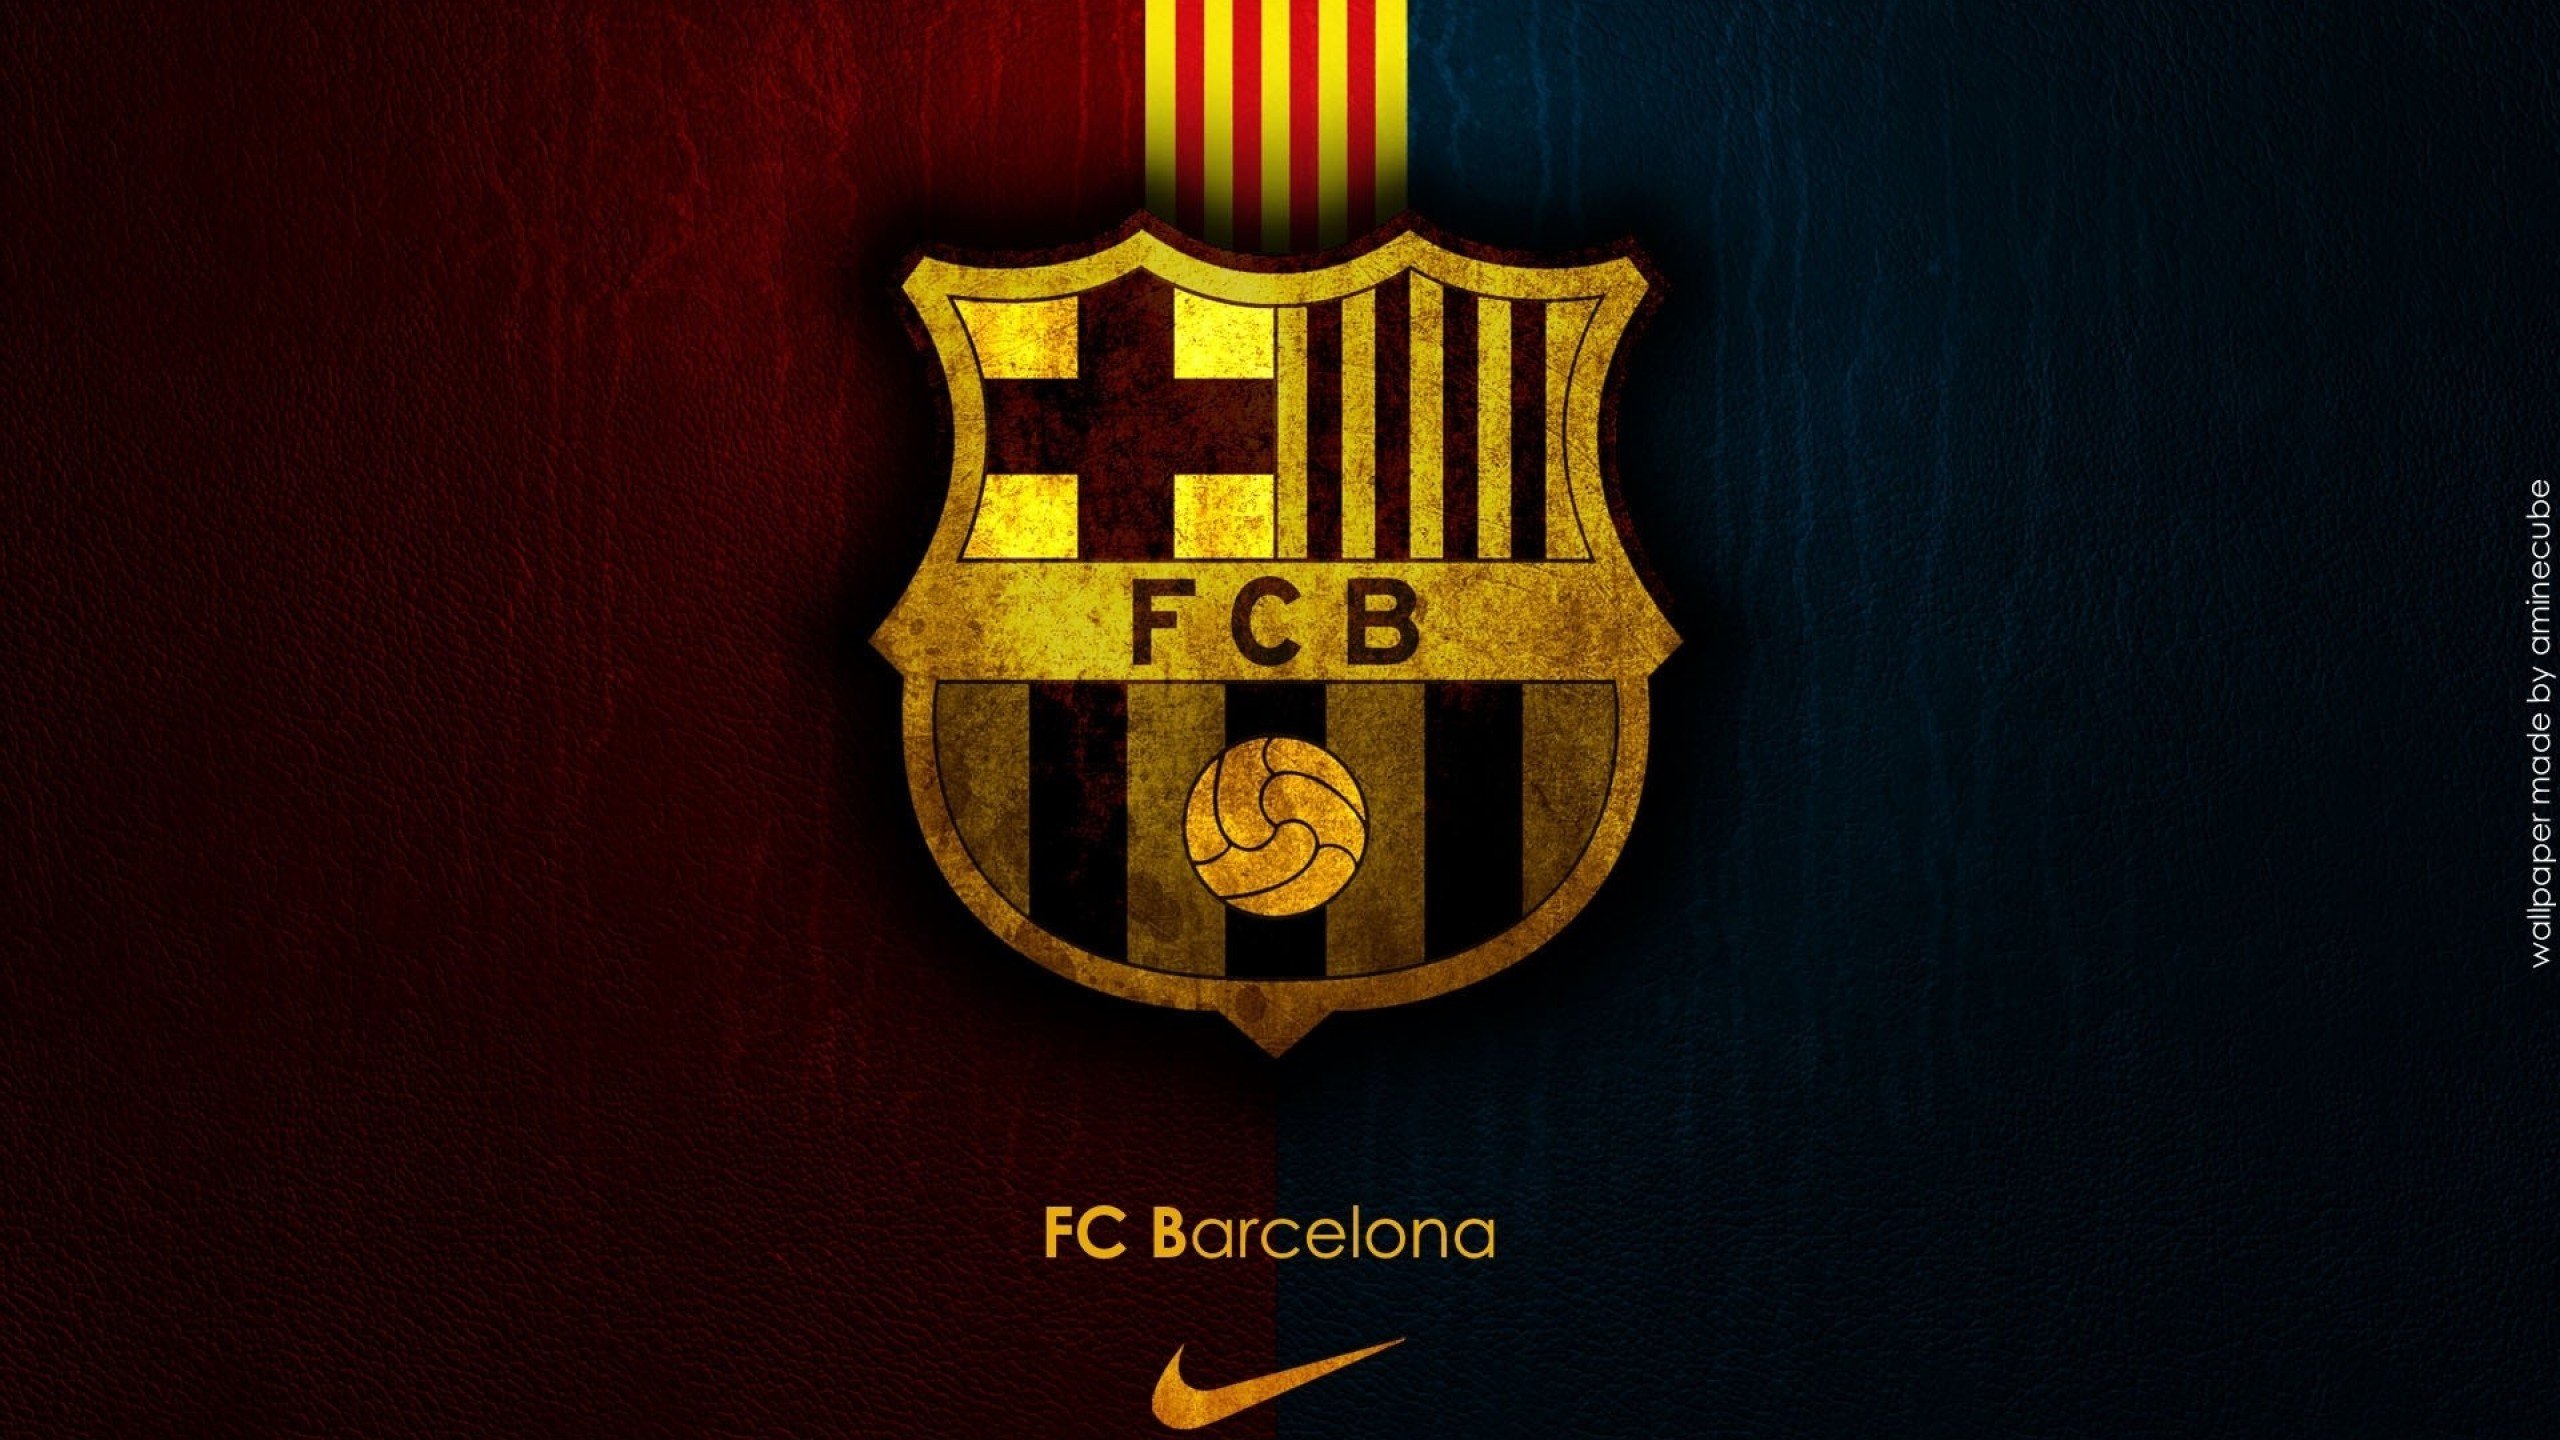 Free FC Barcelona high quality wallpaper ID:137868 for hd 2560x1440 desktop